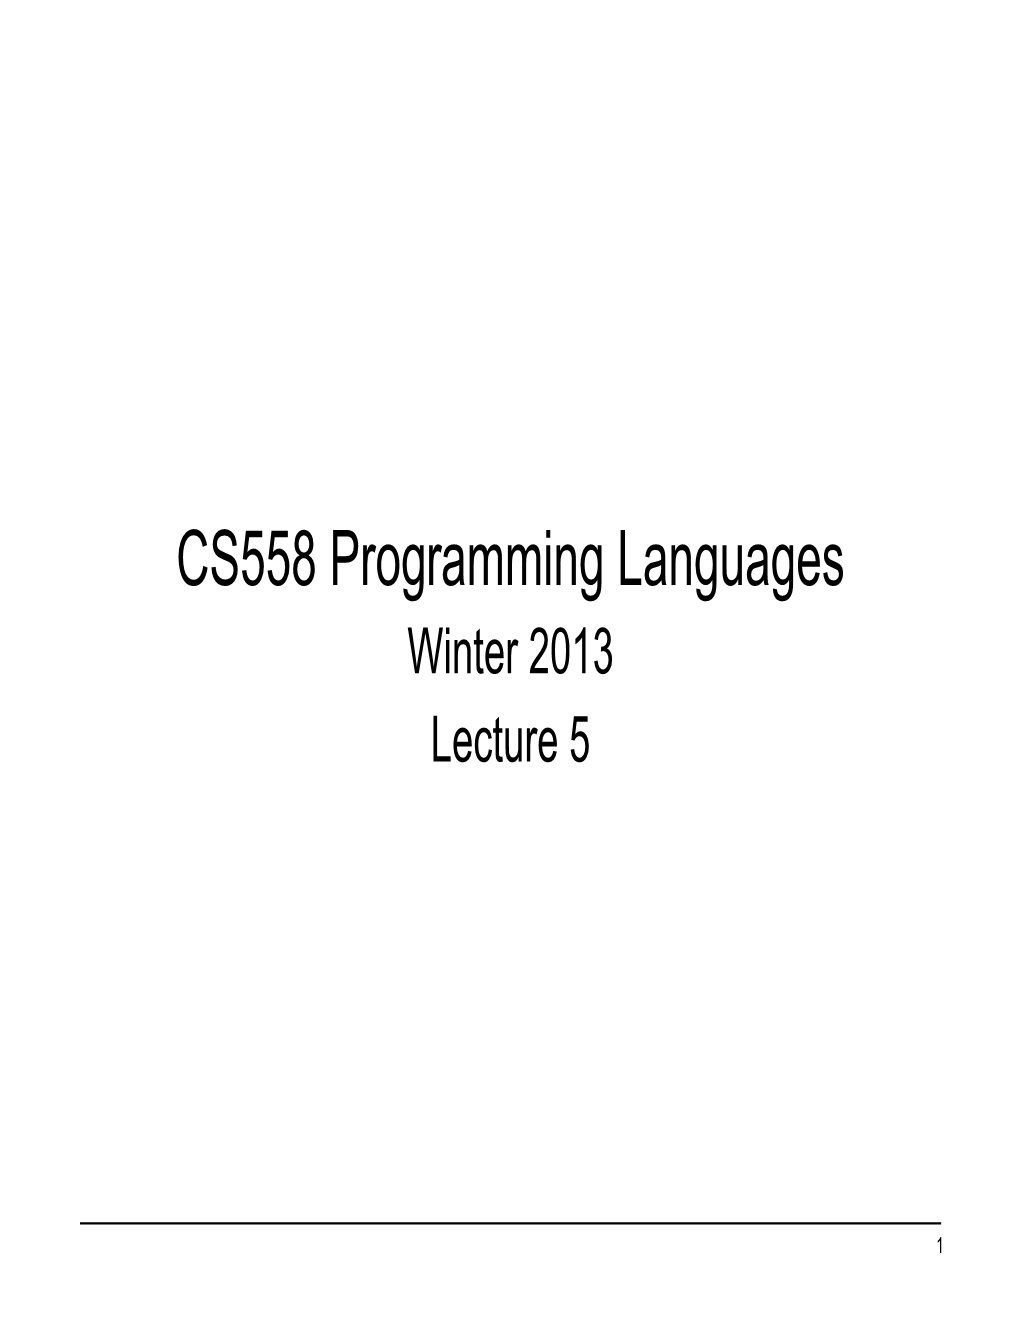 CS558 Programming Languages Winter 2013 Lecture 5